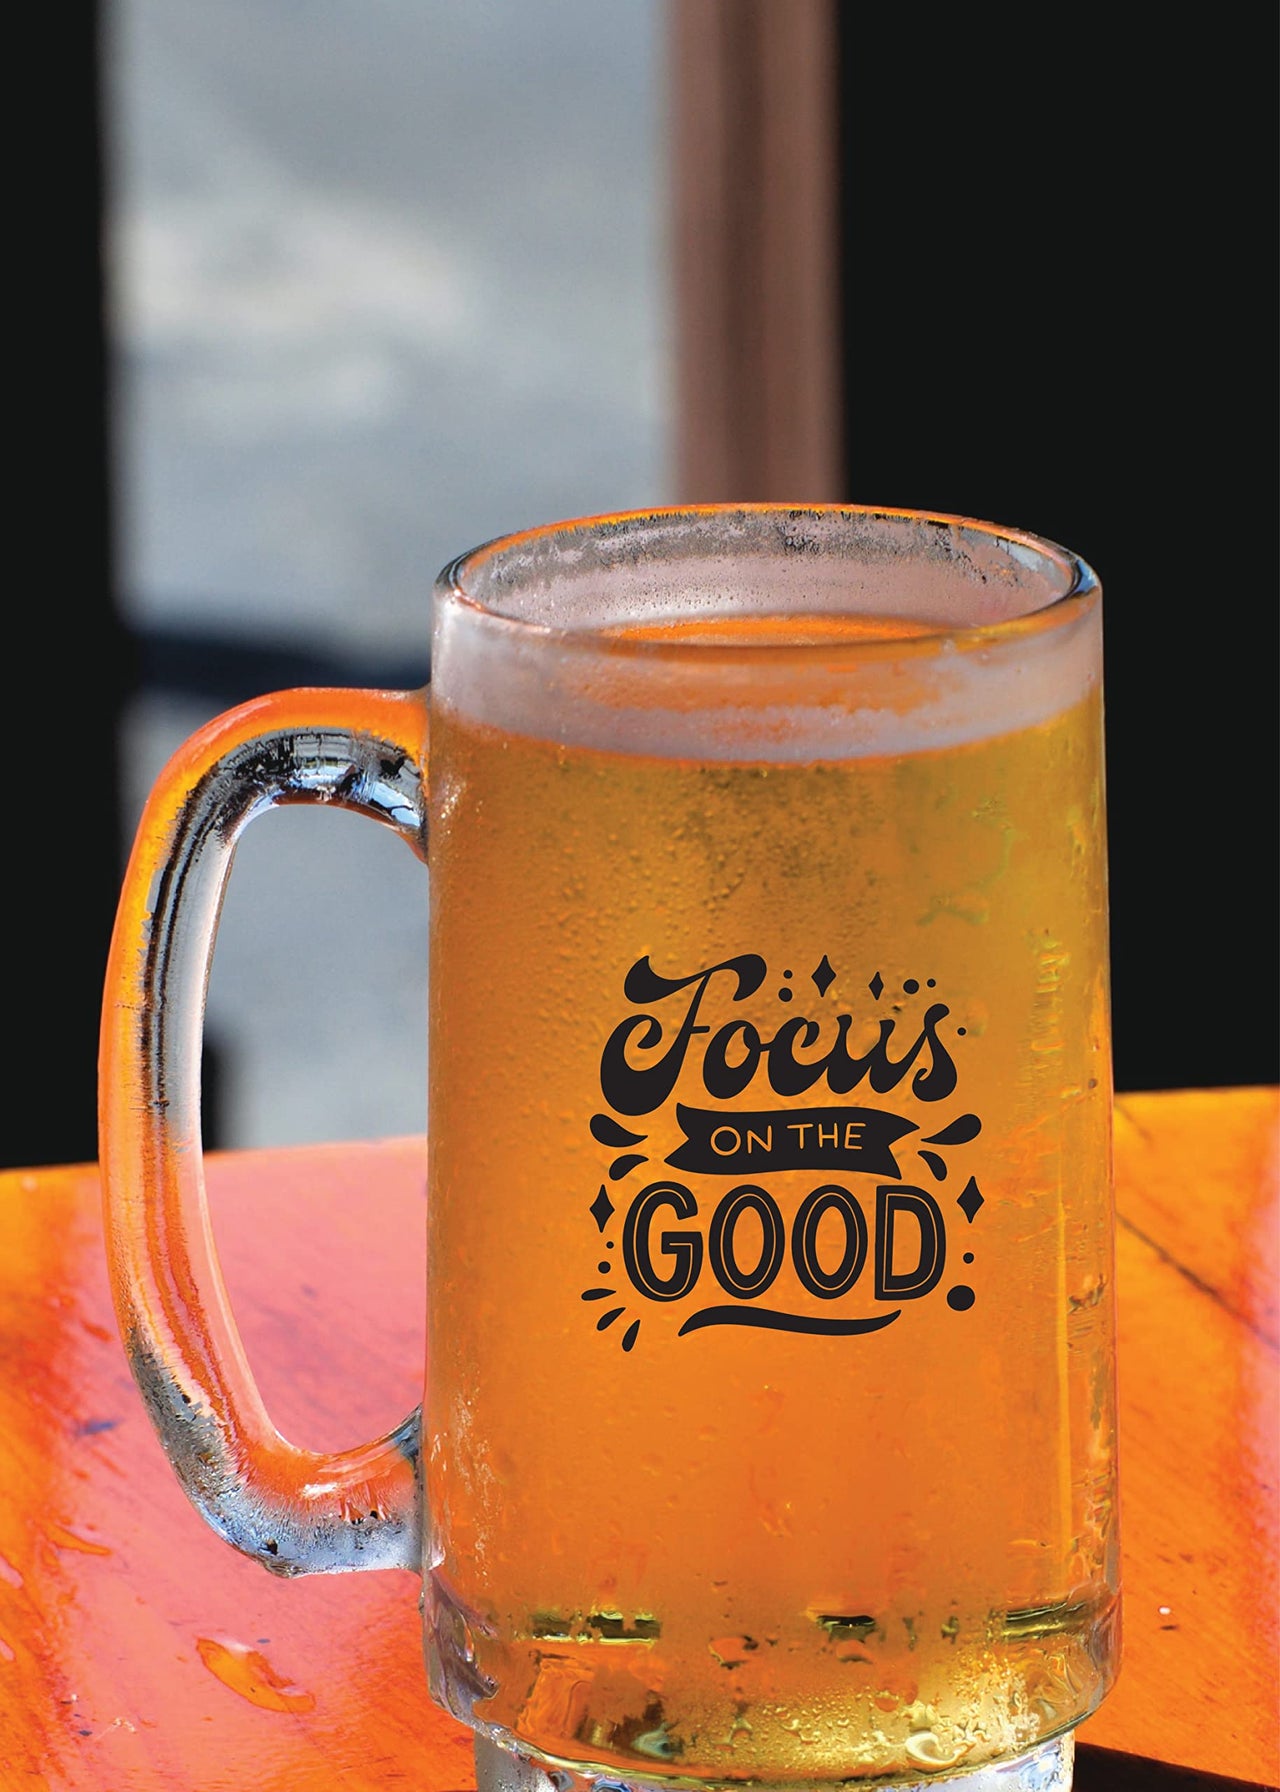 Focus On The Good - Beer Mug - 1 Piece, Clear, 500 ml - Transparent Glass Beer Mug - Printed Beer Mug with Handle Gift for Men, Dad